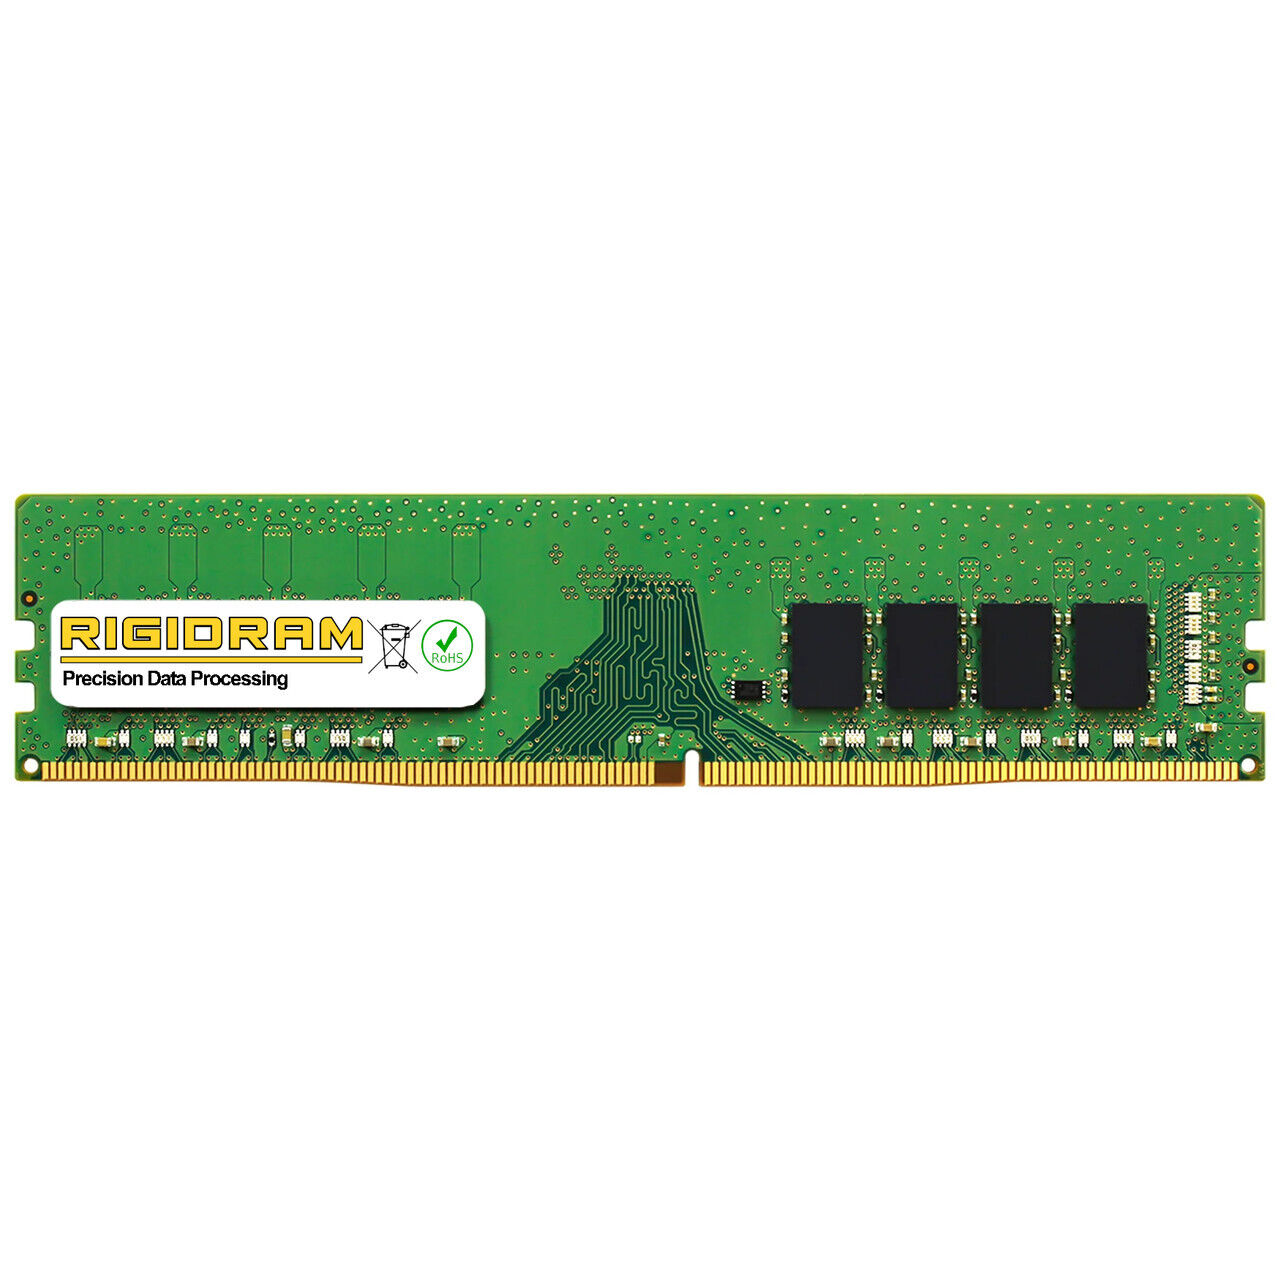 16GB RAM HP Workstation Z2 G5 DDR4 Memory RigidRAM Upgrades